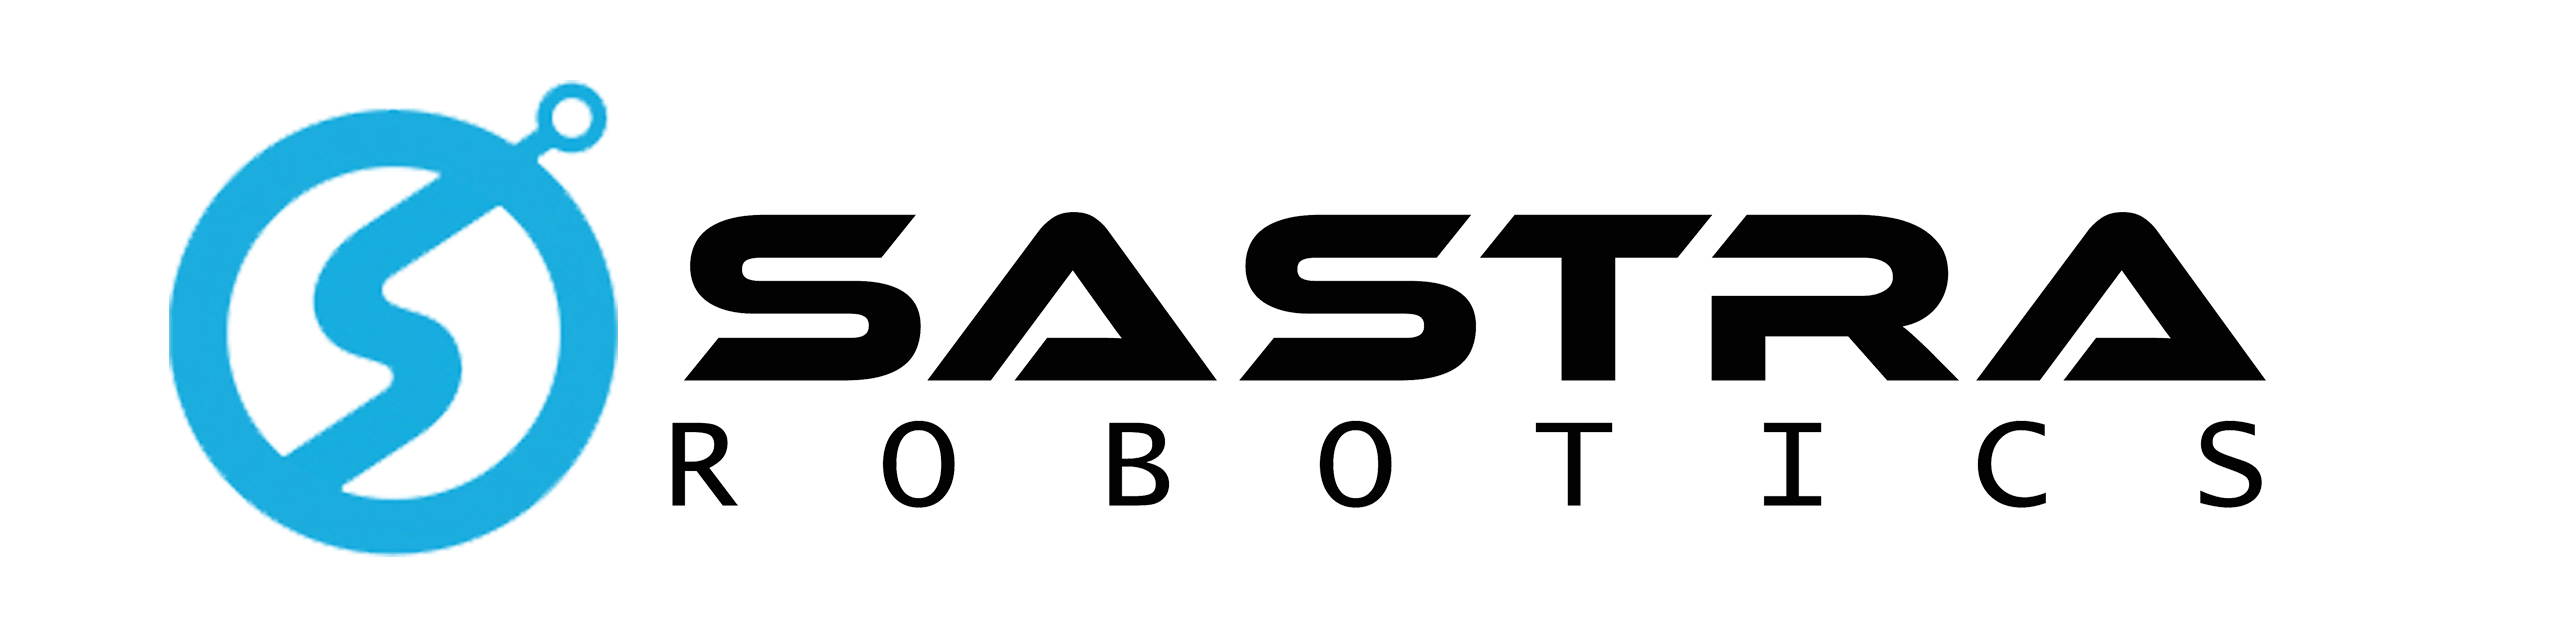 Robot Arm Logo - Robotic Automated Human Machine Interface Testing | Sastra Robotics